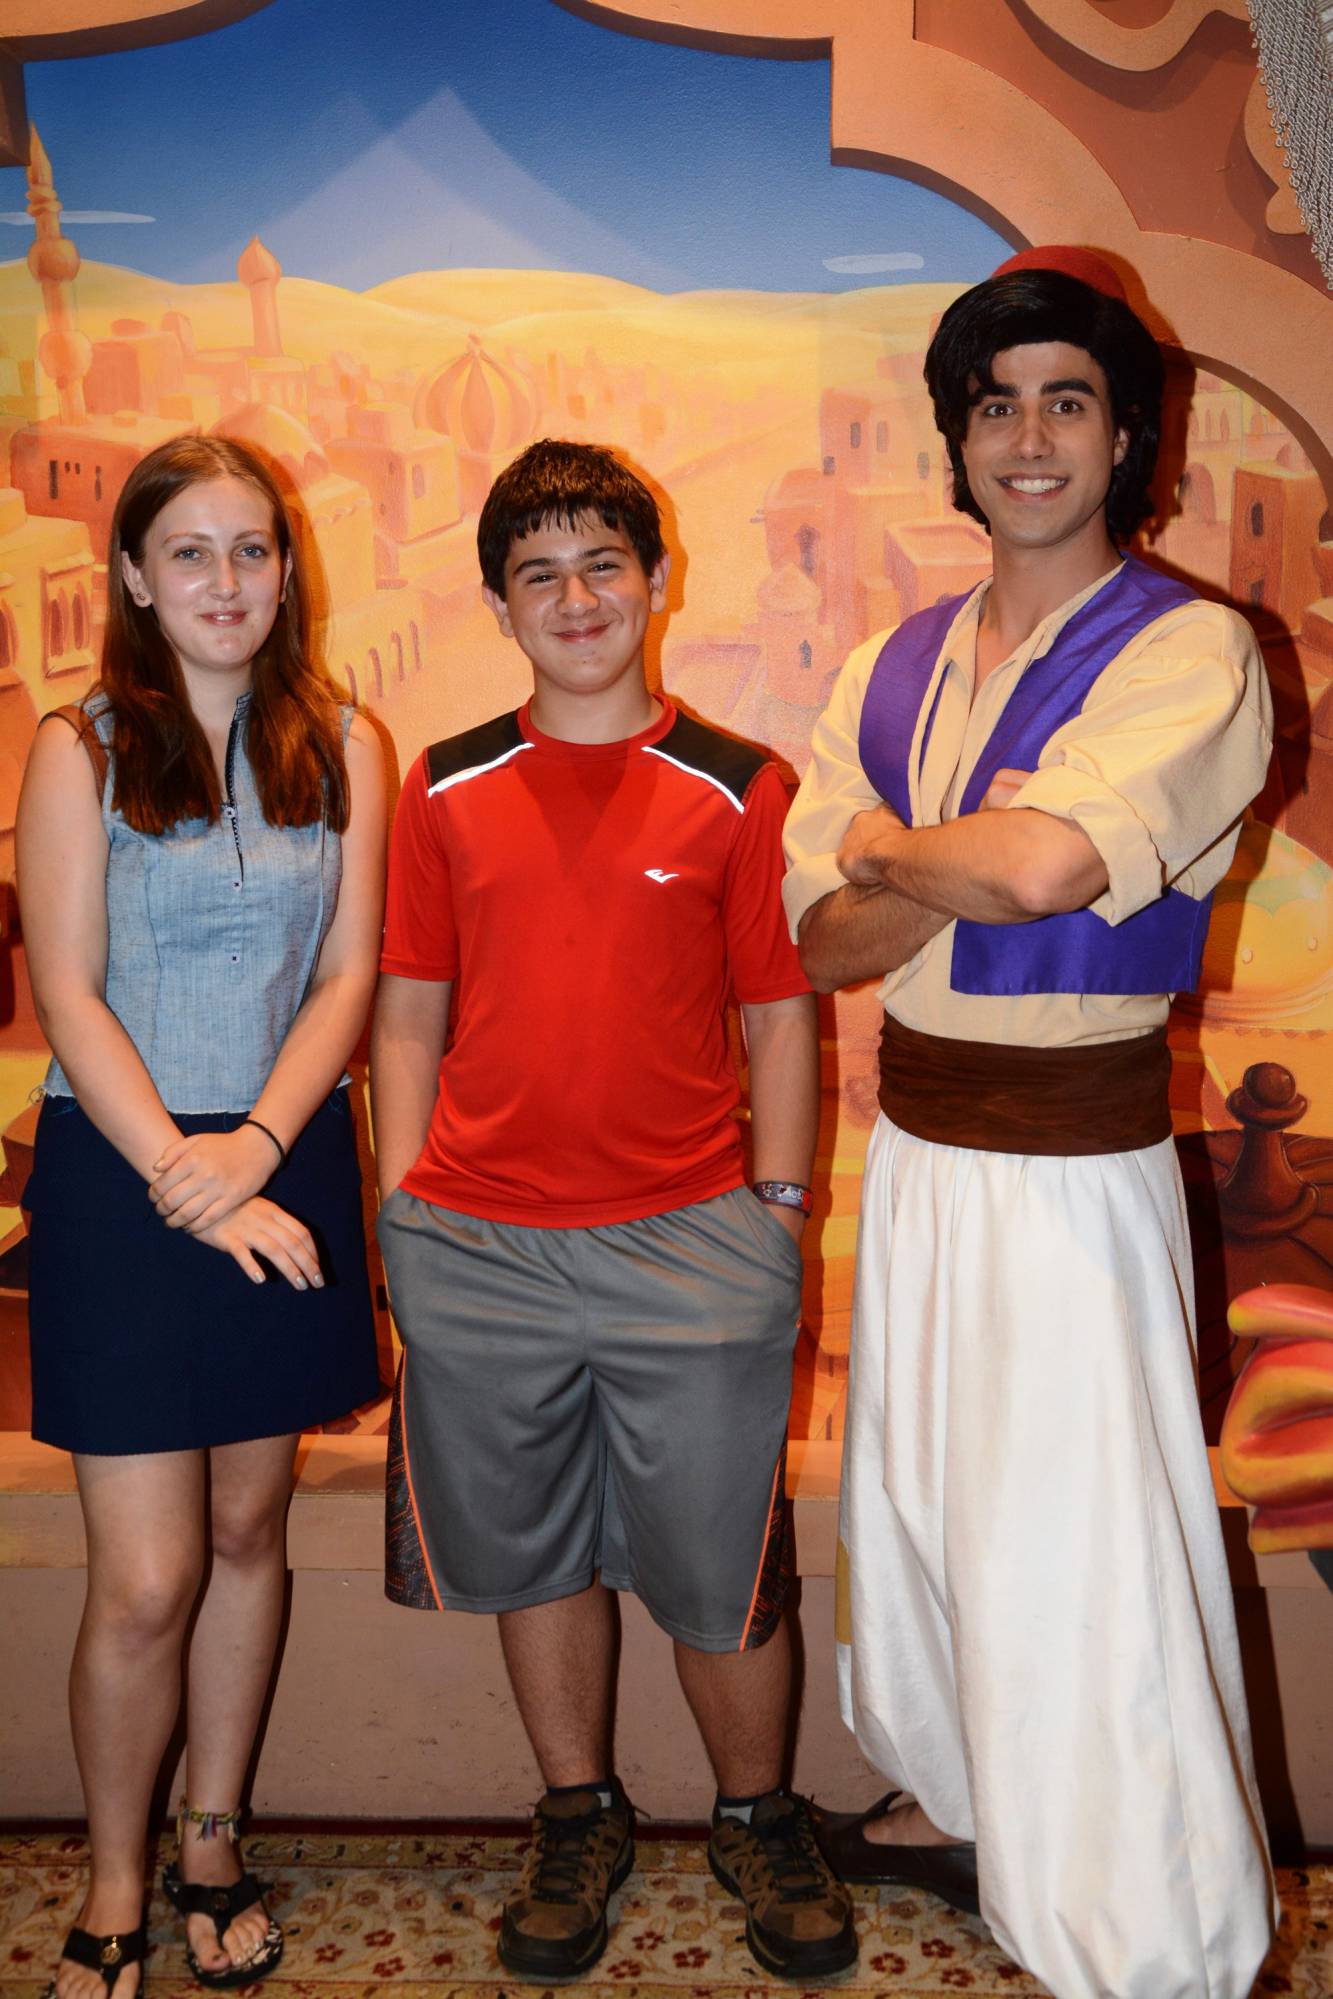 Tips for touring Walt Disney World with teens |PassPorter.com